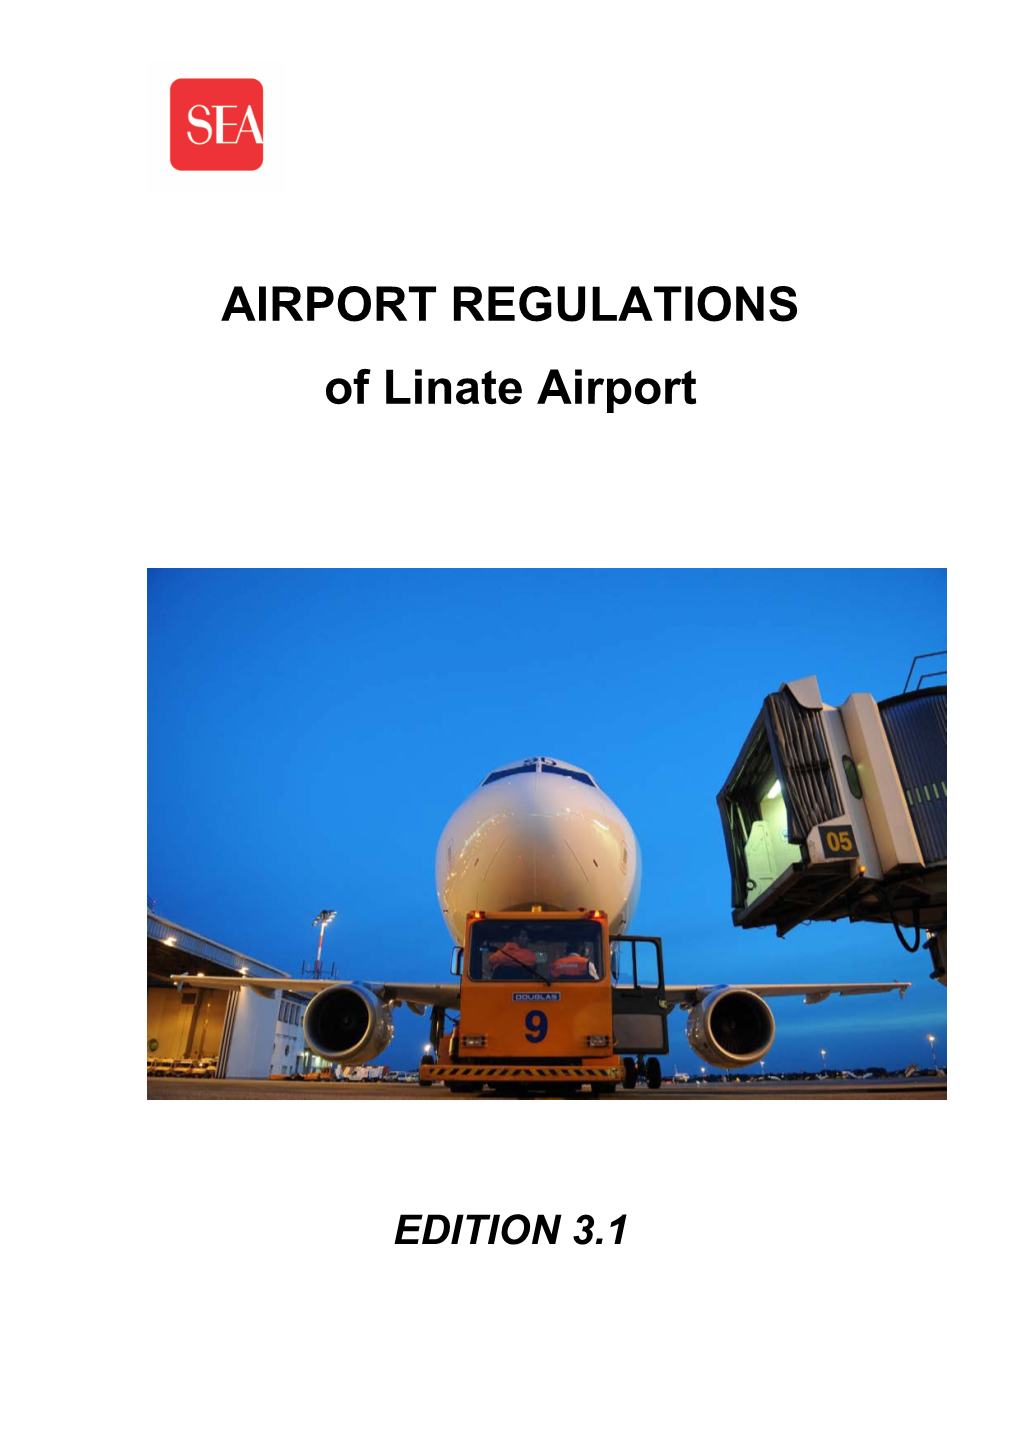 AIRPORT REGULATIONS of Linate Airport